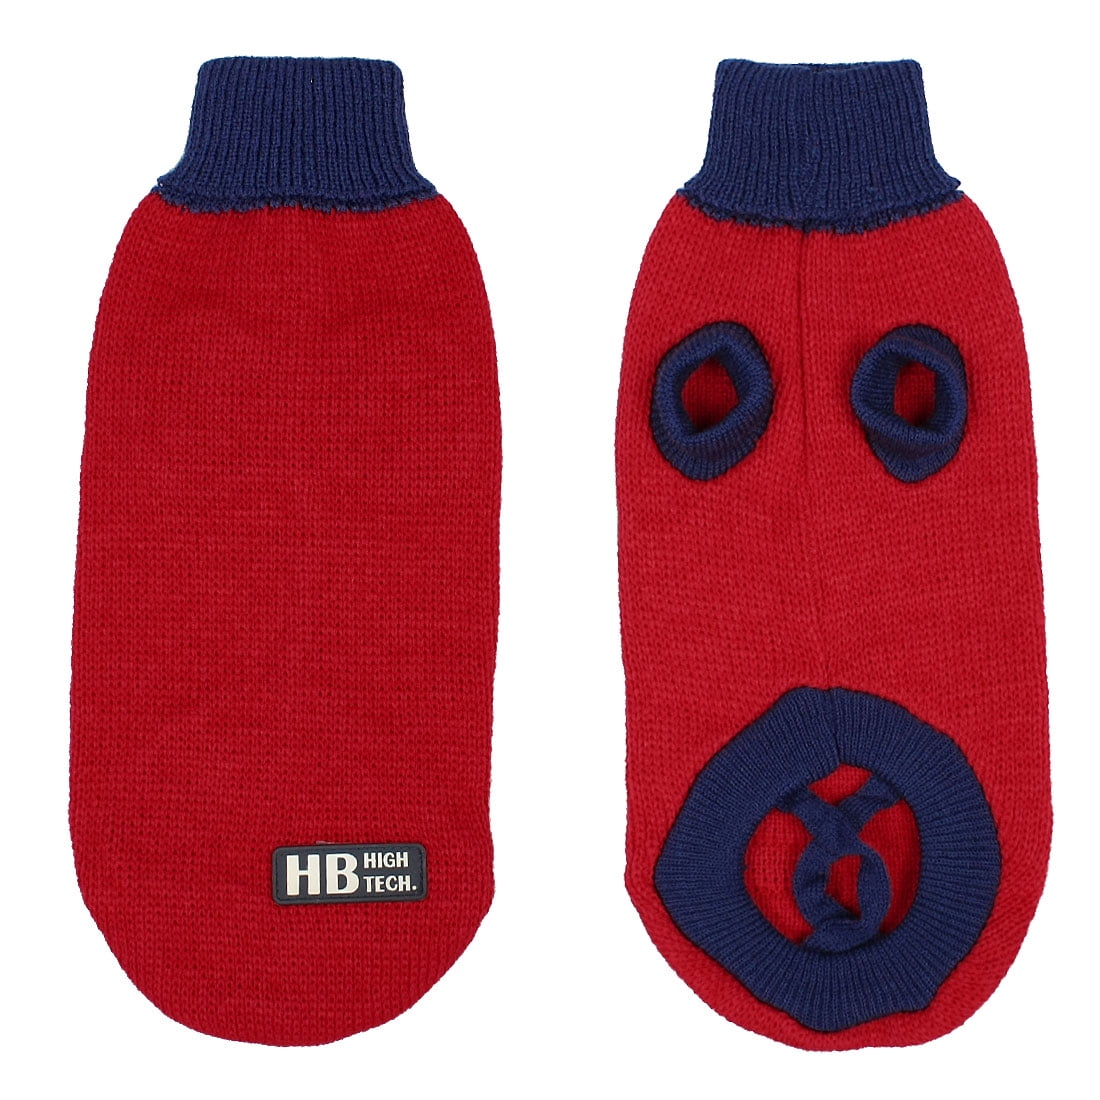 Winter Turtleneck Knitwear Dog Sweater Pet Clothing Coat Red L | Walmart Canada